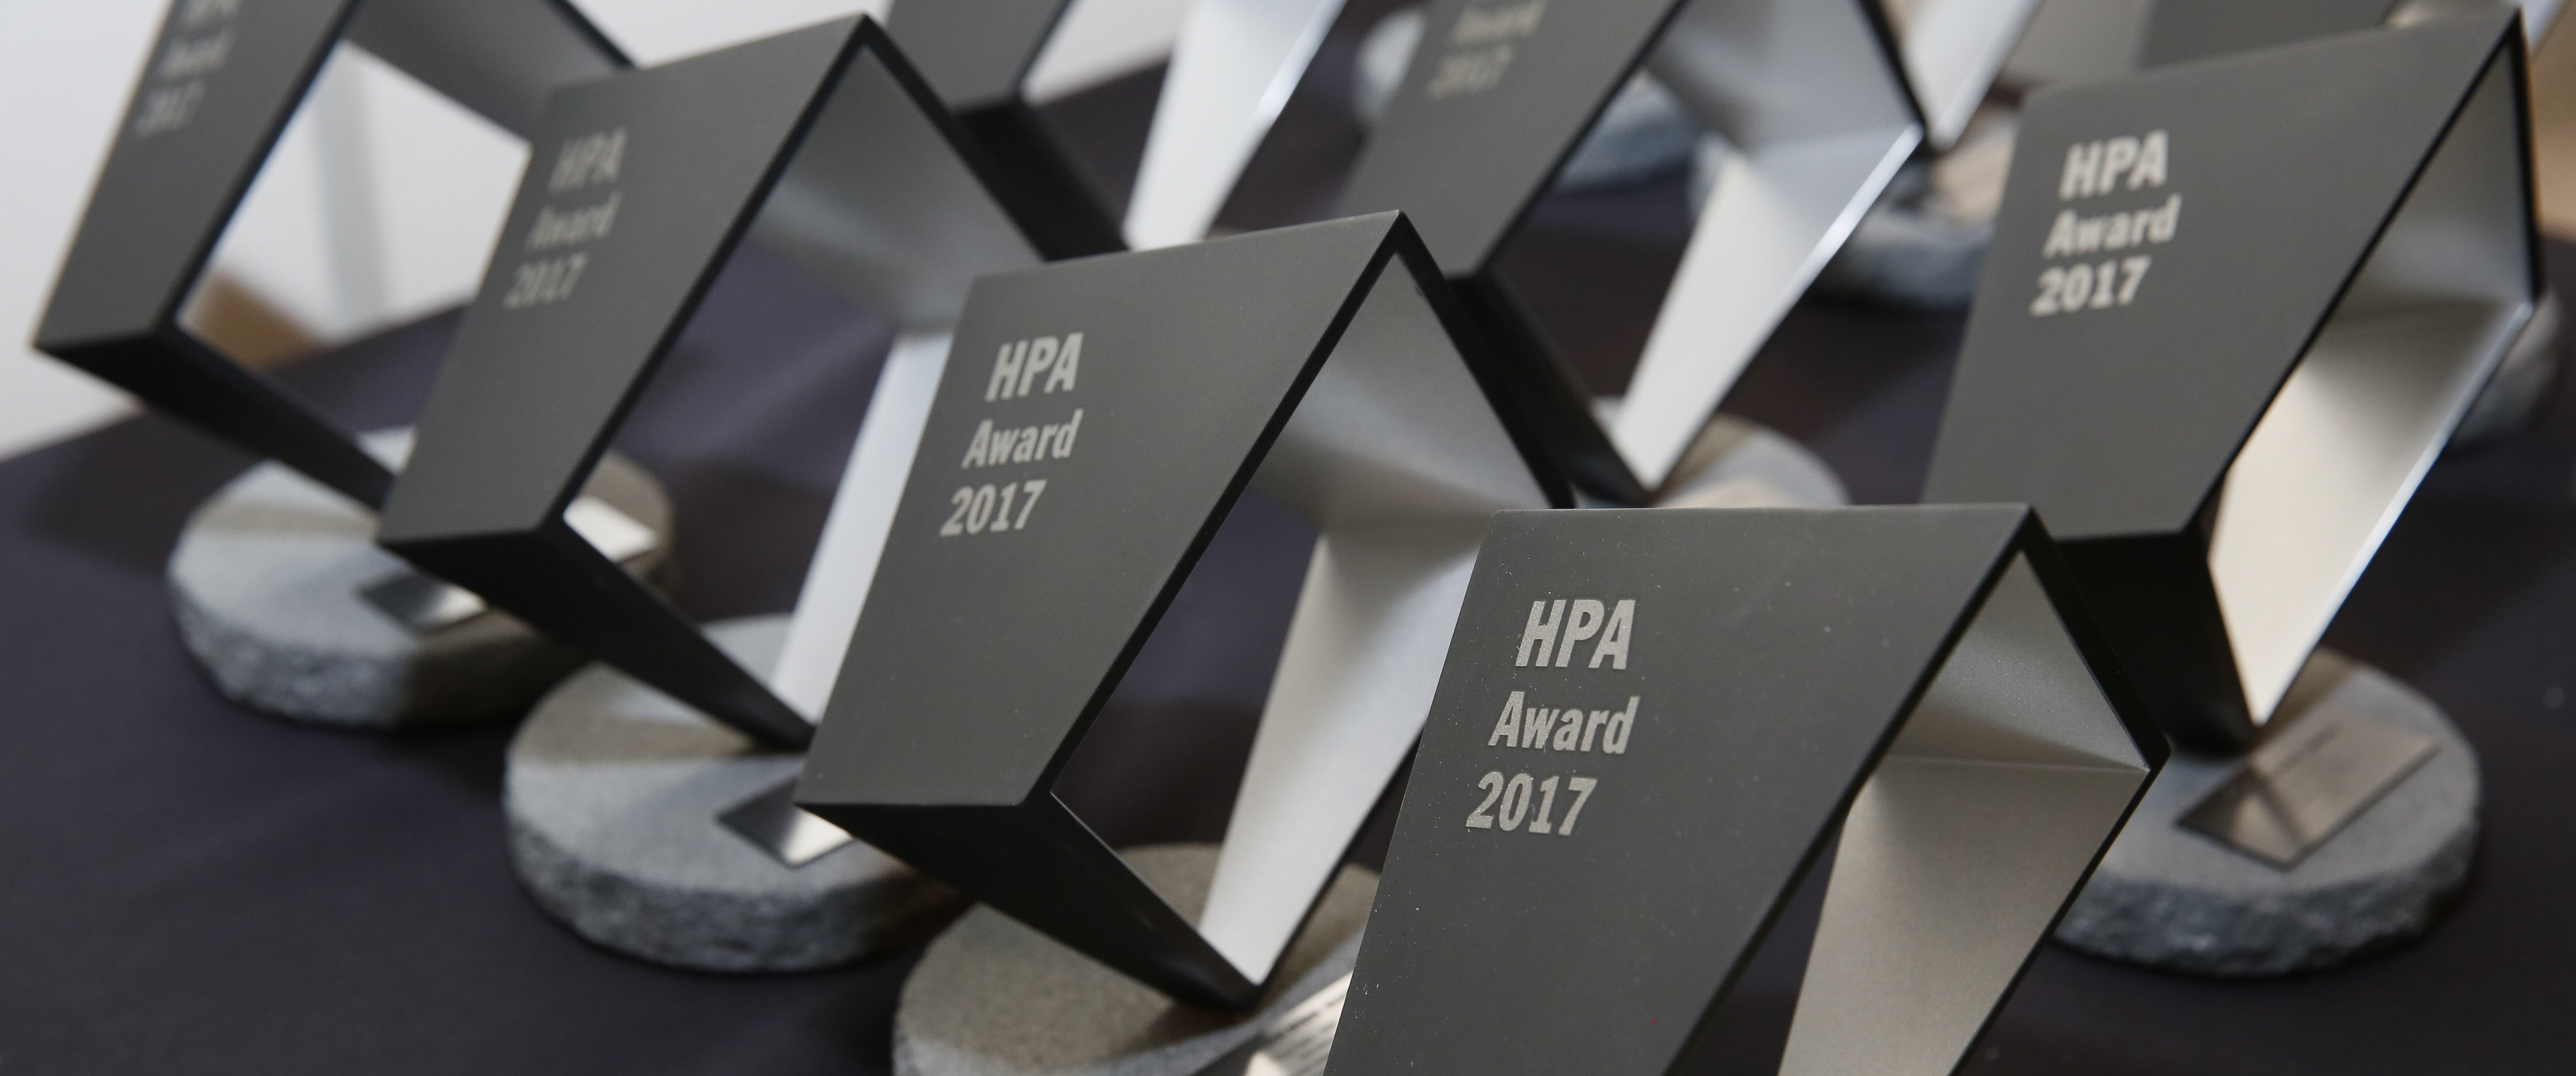 Hpa Awards 2017 01 Opener